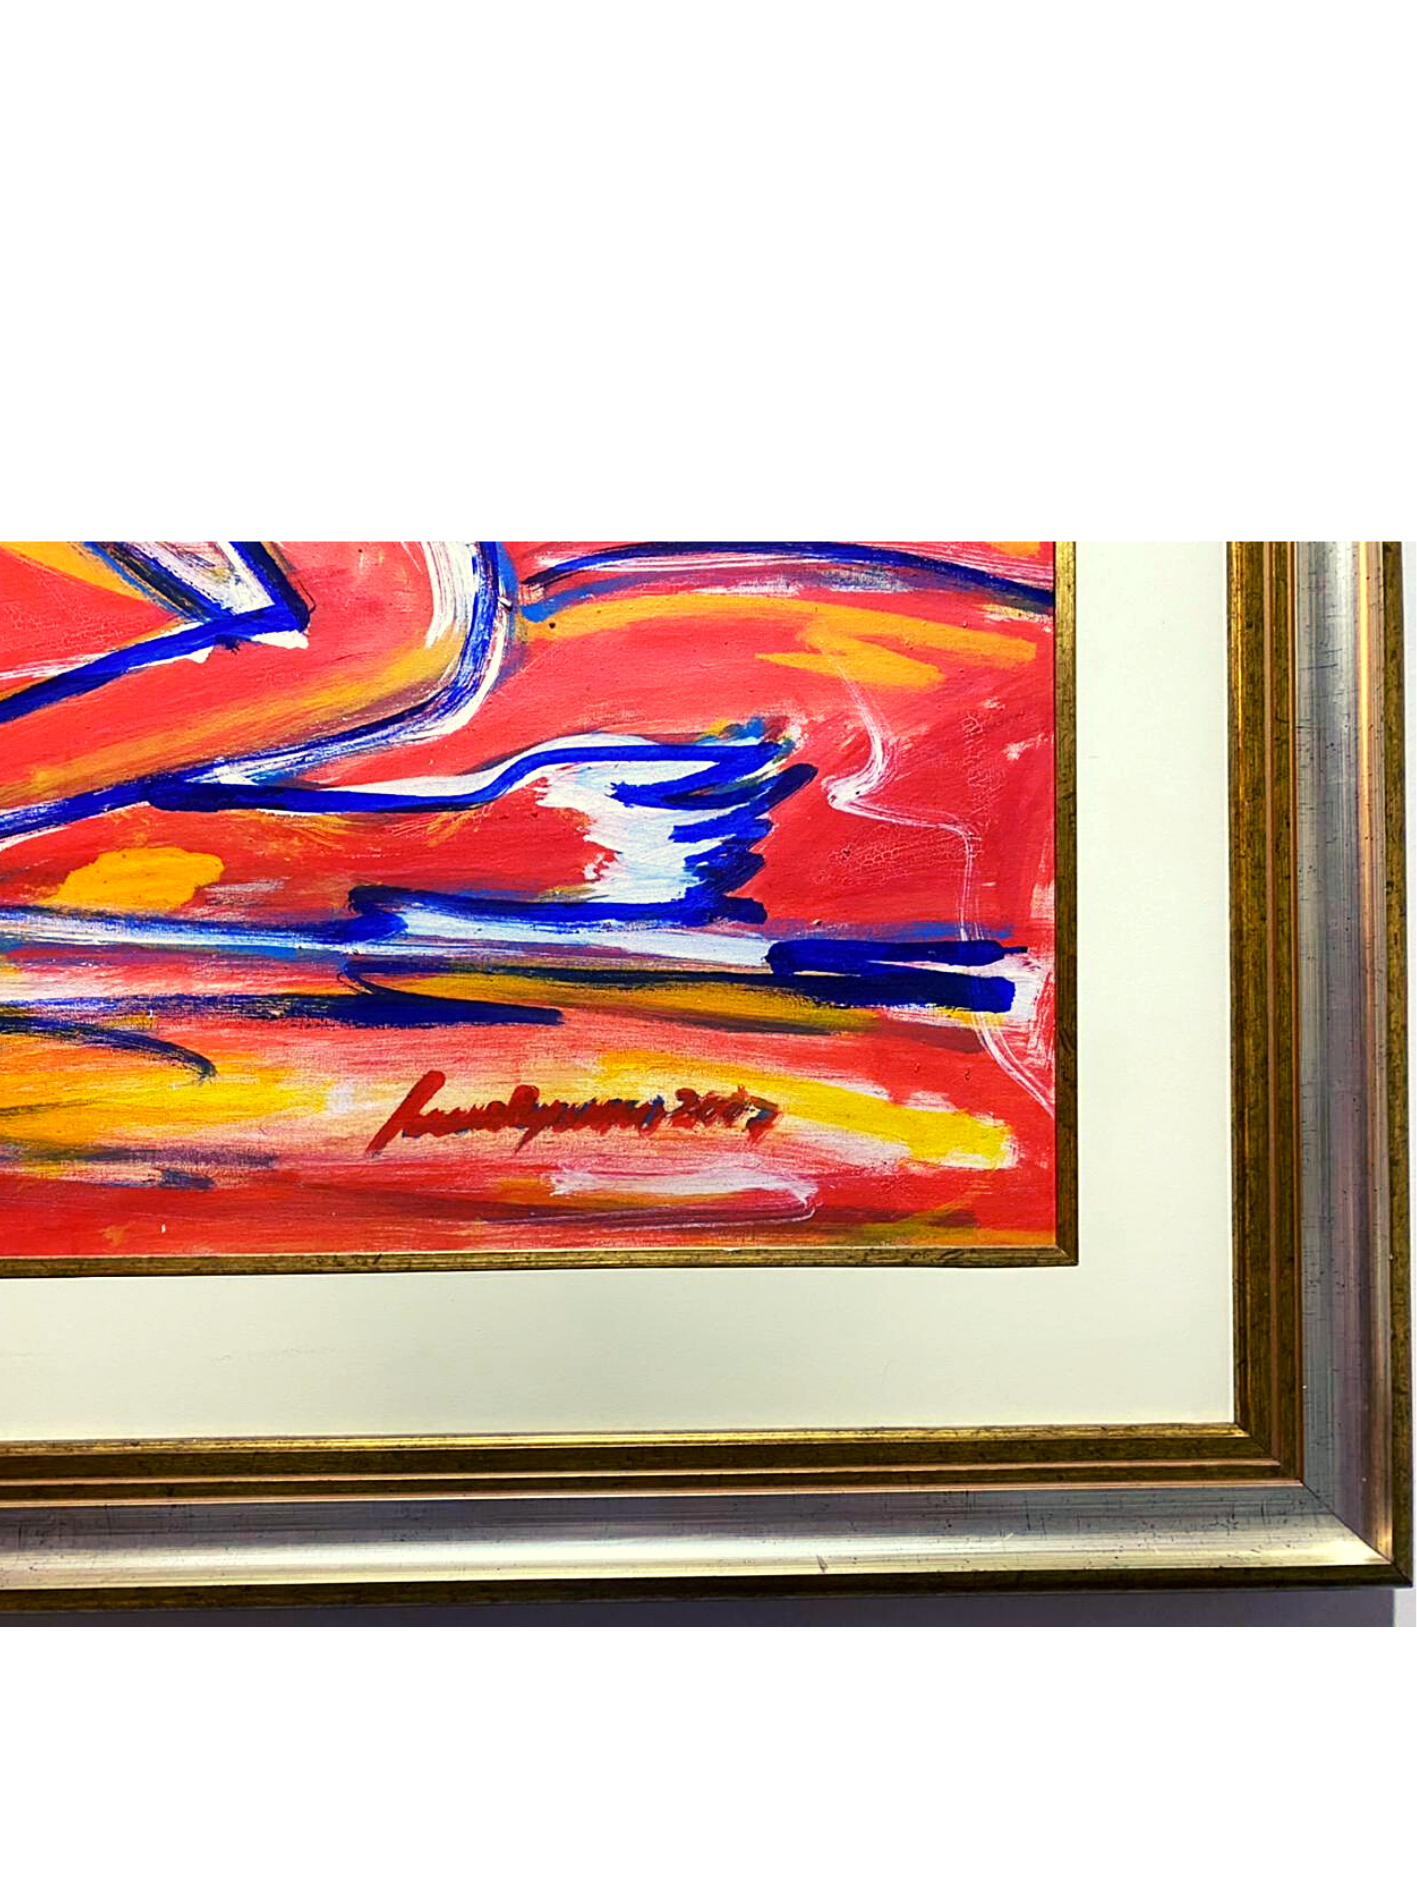 Cuadro de Lucio Aquino 97 x 68 cm